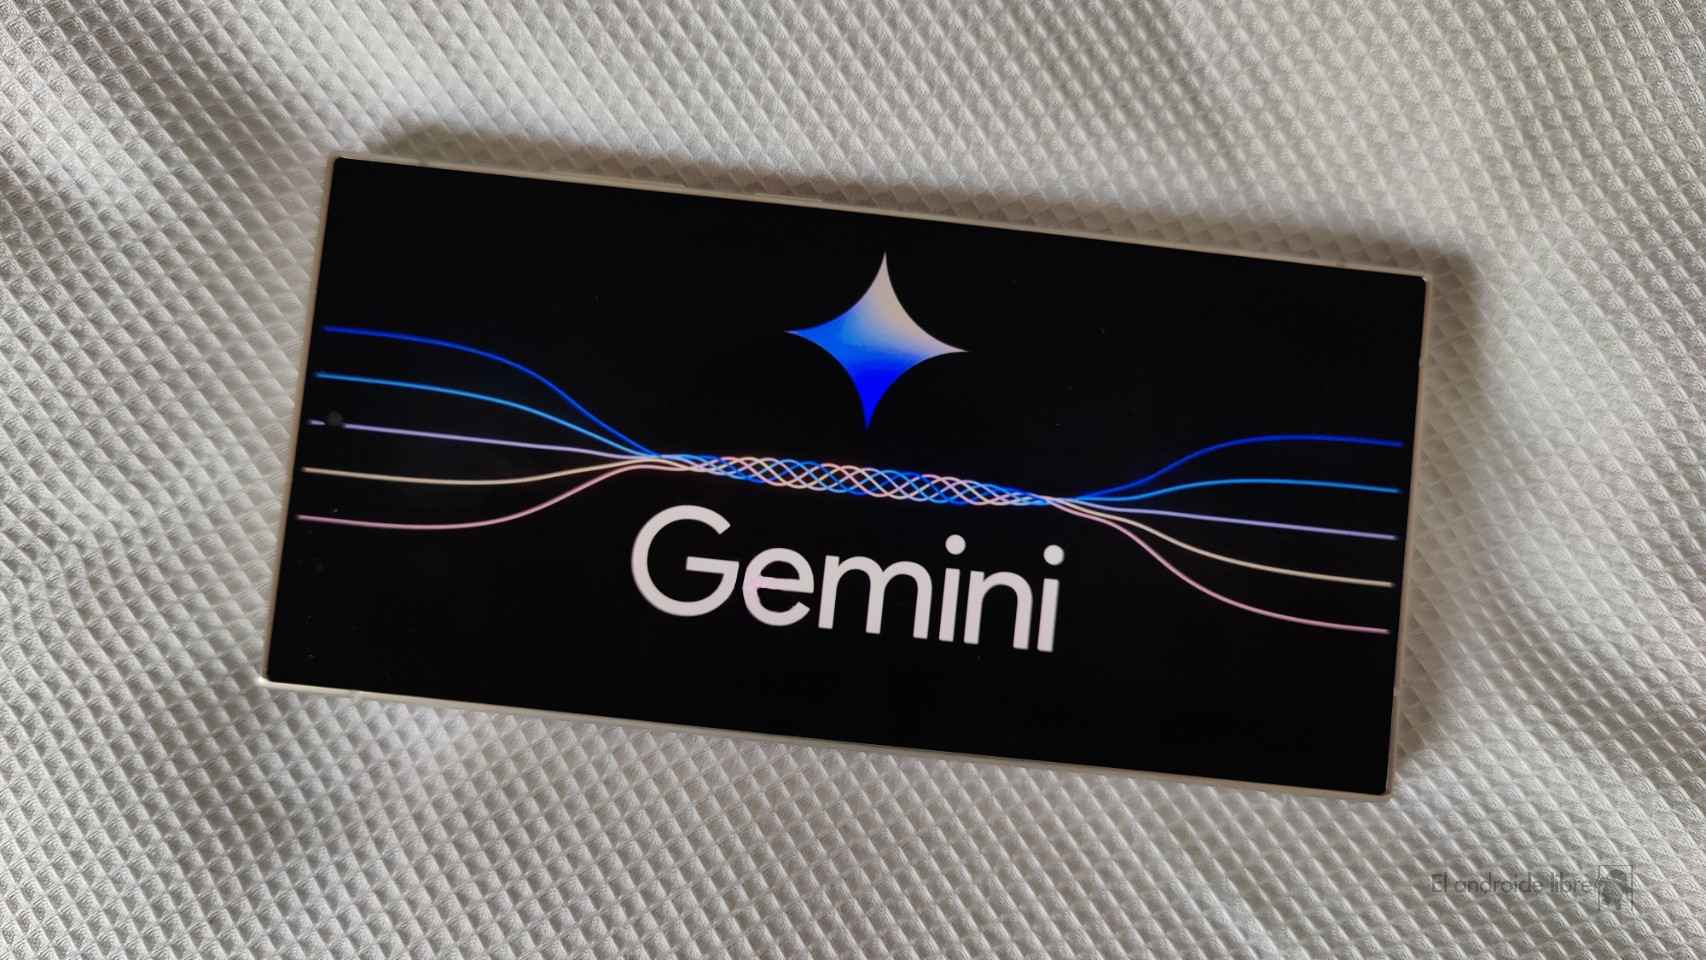 Logo de Gemini en un móvil Samsung